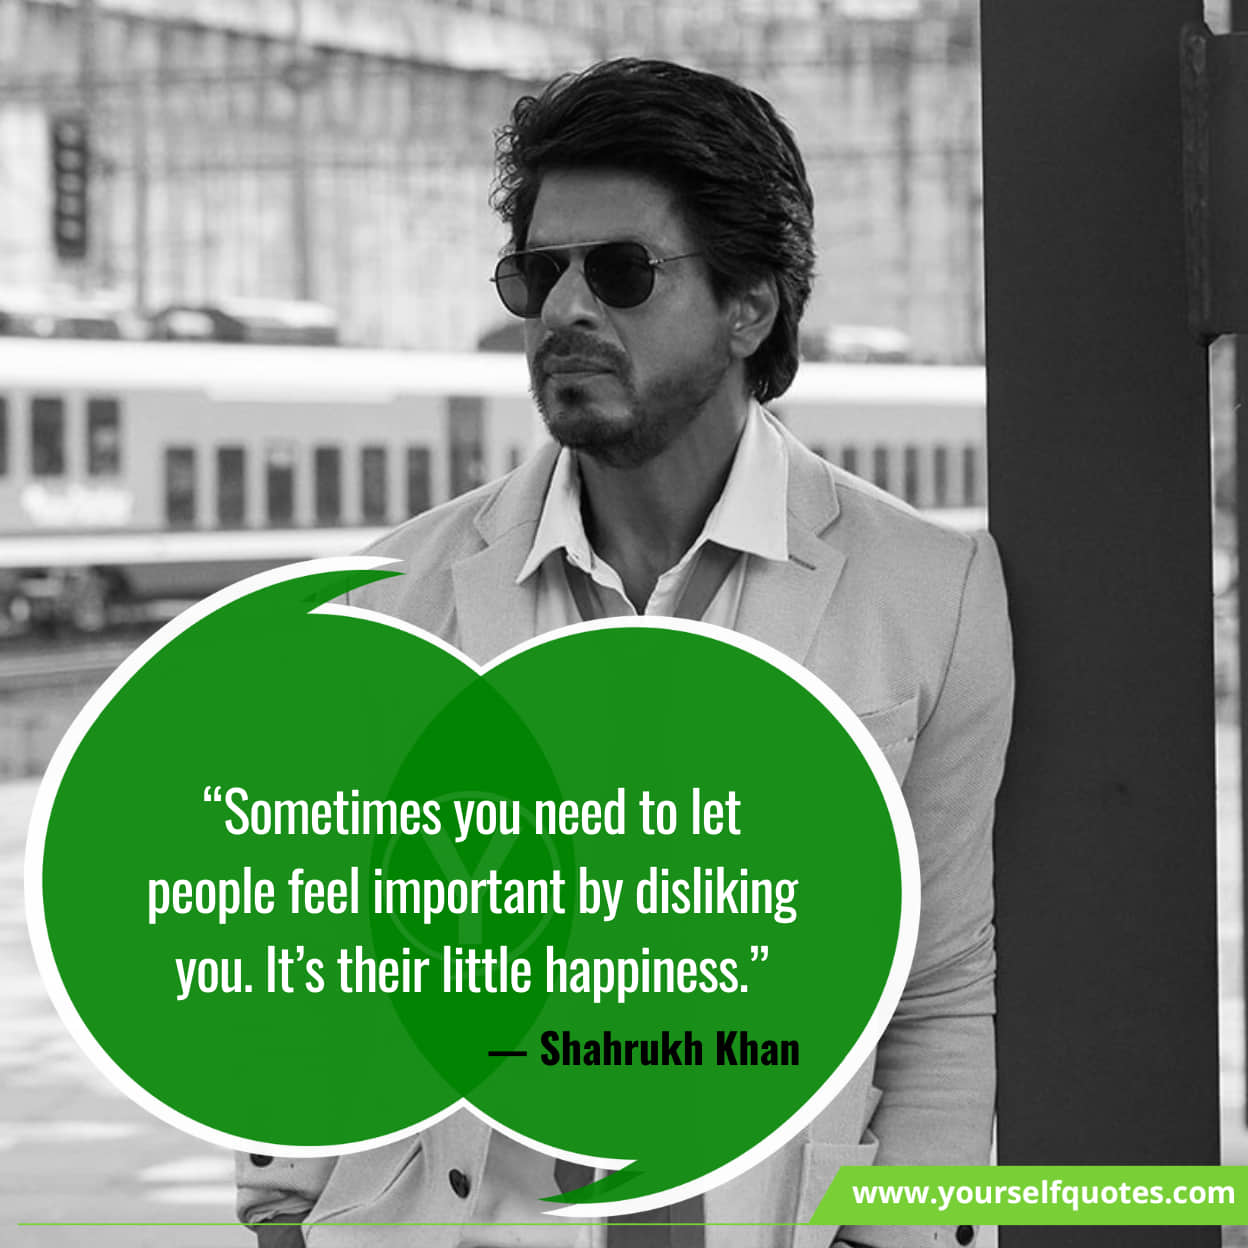 Shahrukh Khan quotes on dreams and aspirations